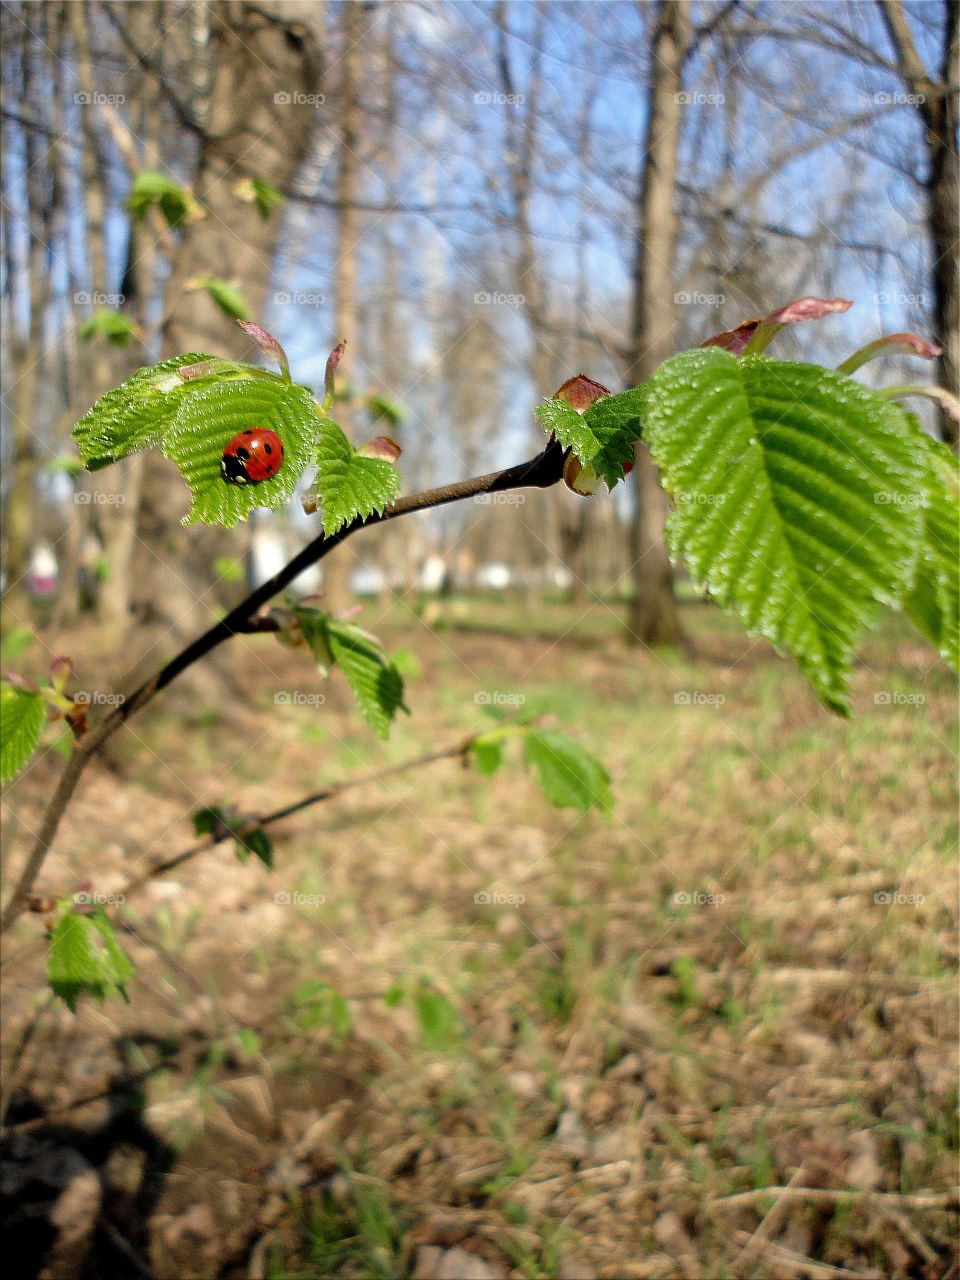 ladybug on a young green leaf spring landscape in the park